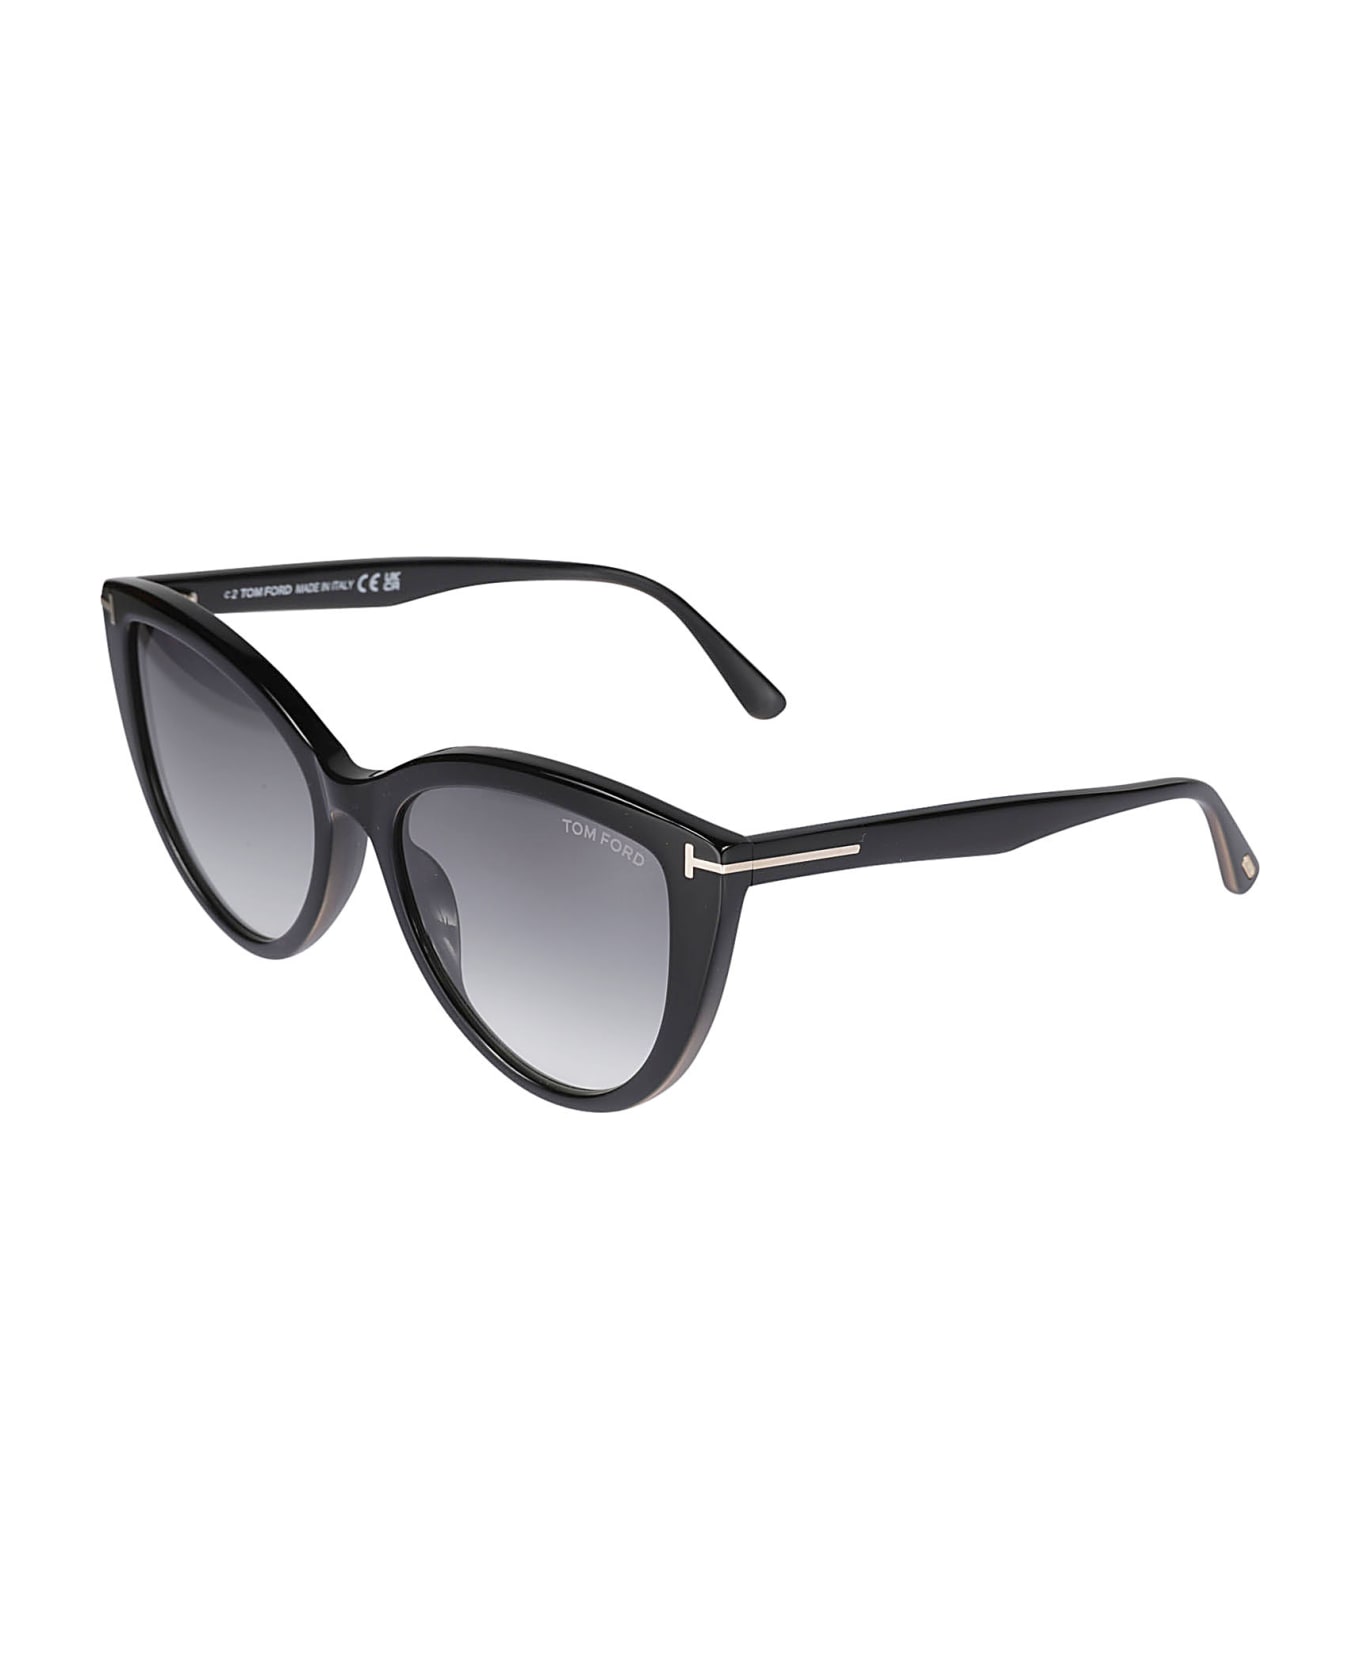 Tom Ford Eyewear Round Lens T-plaque Sunglasses - N/A